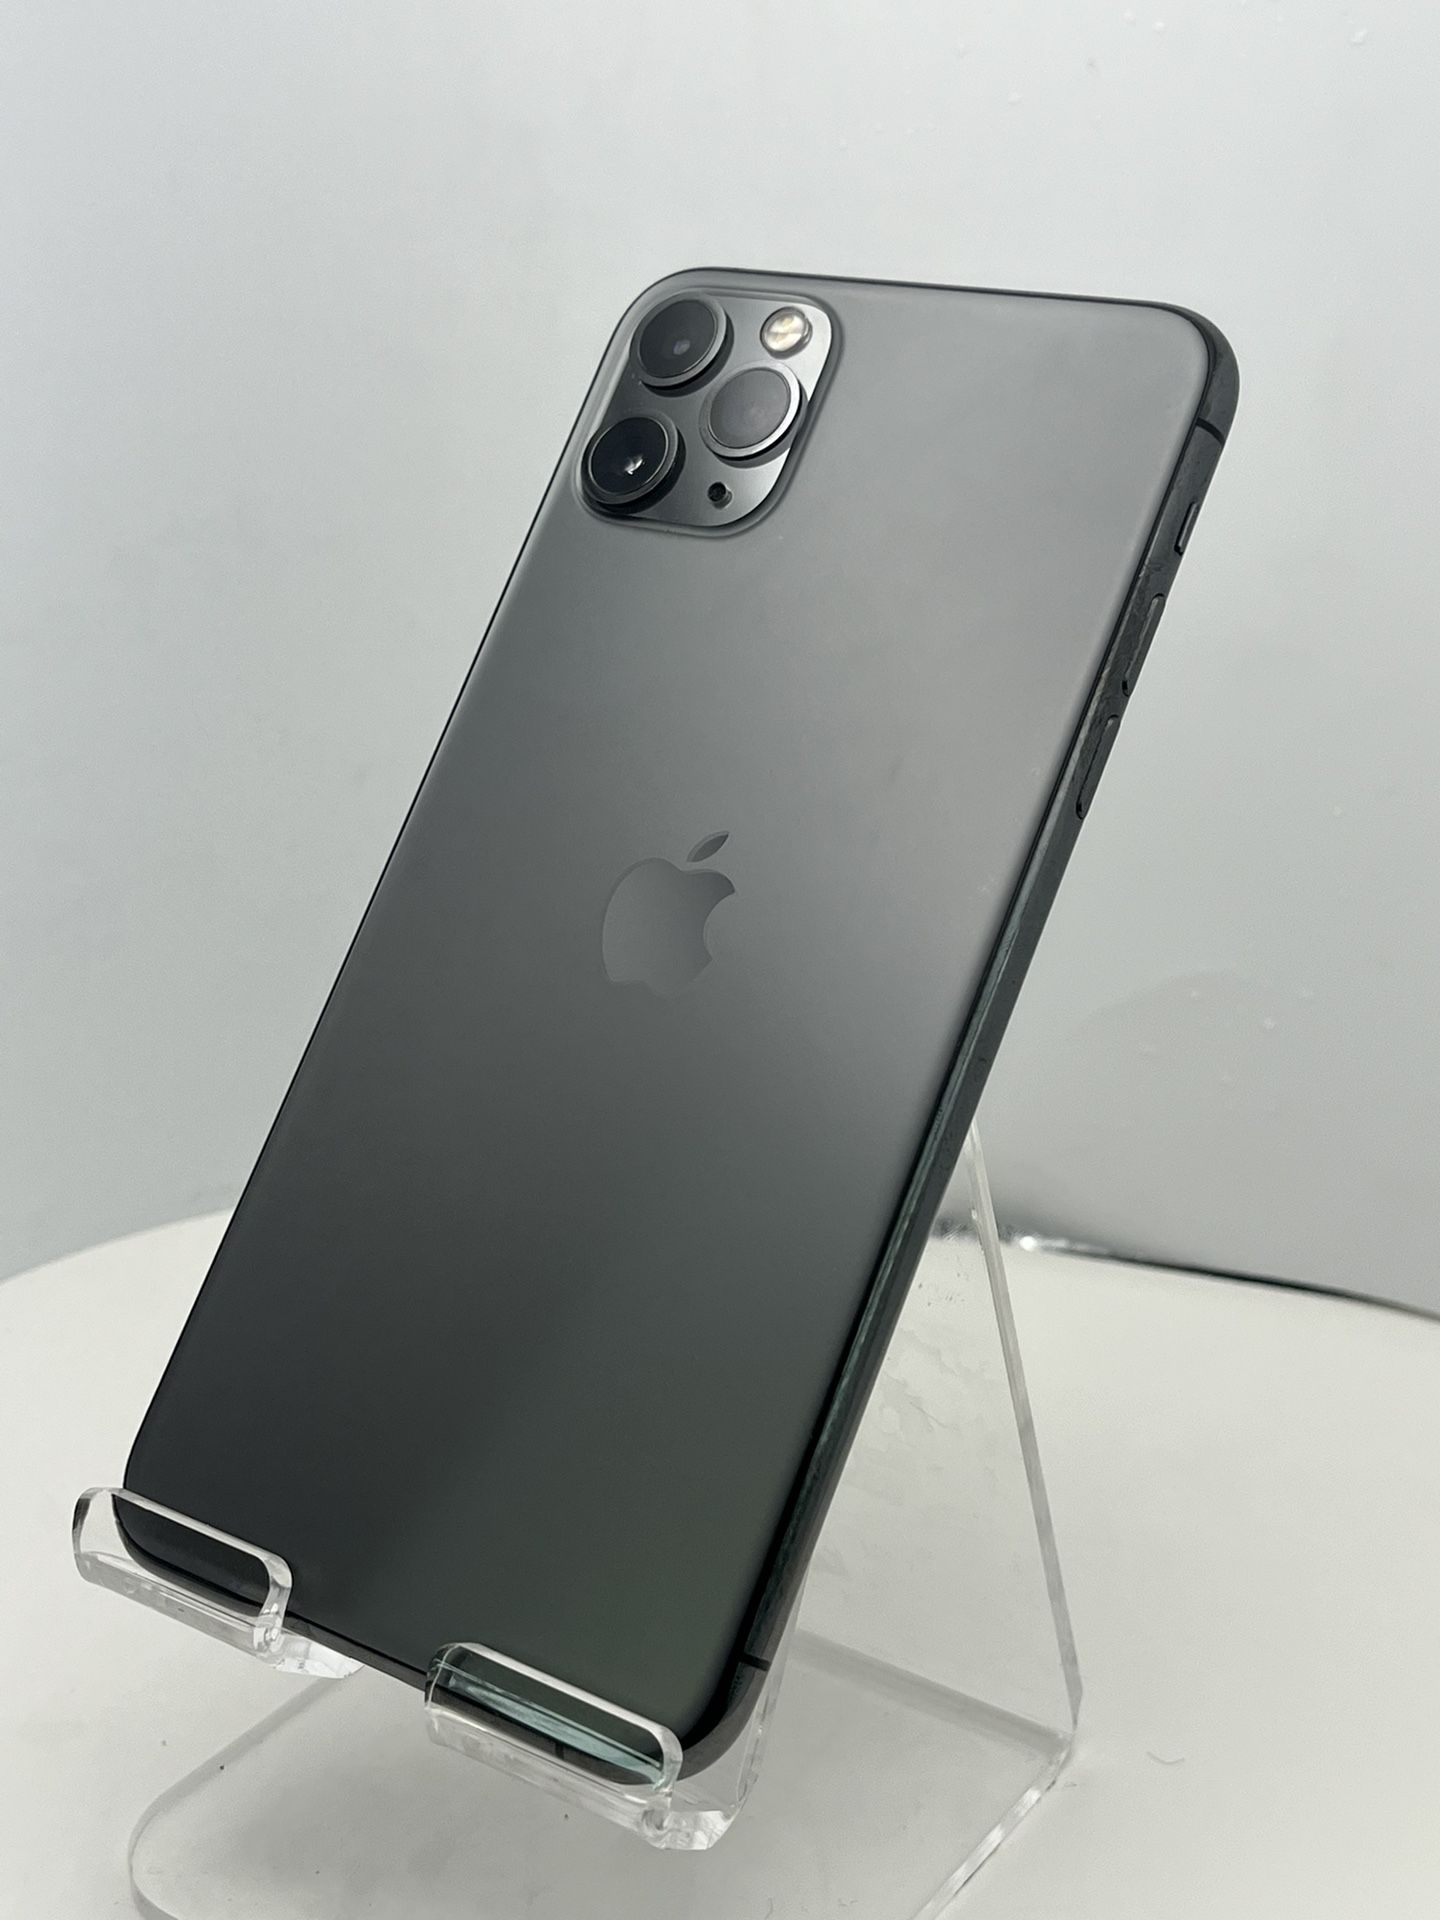 Apple iPhone 11 Pro Max 256 GB Space Grey Unlocked